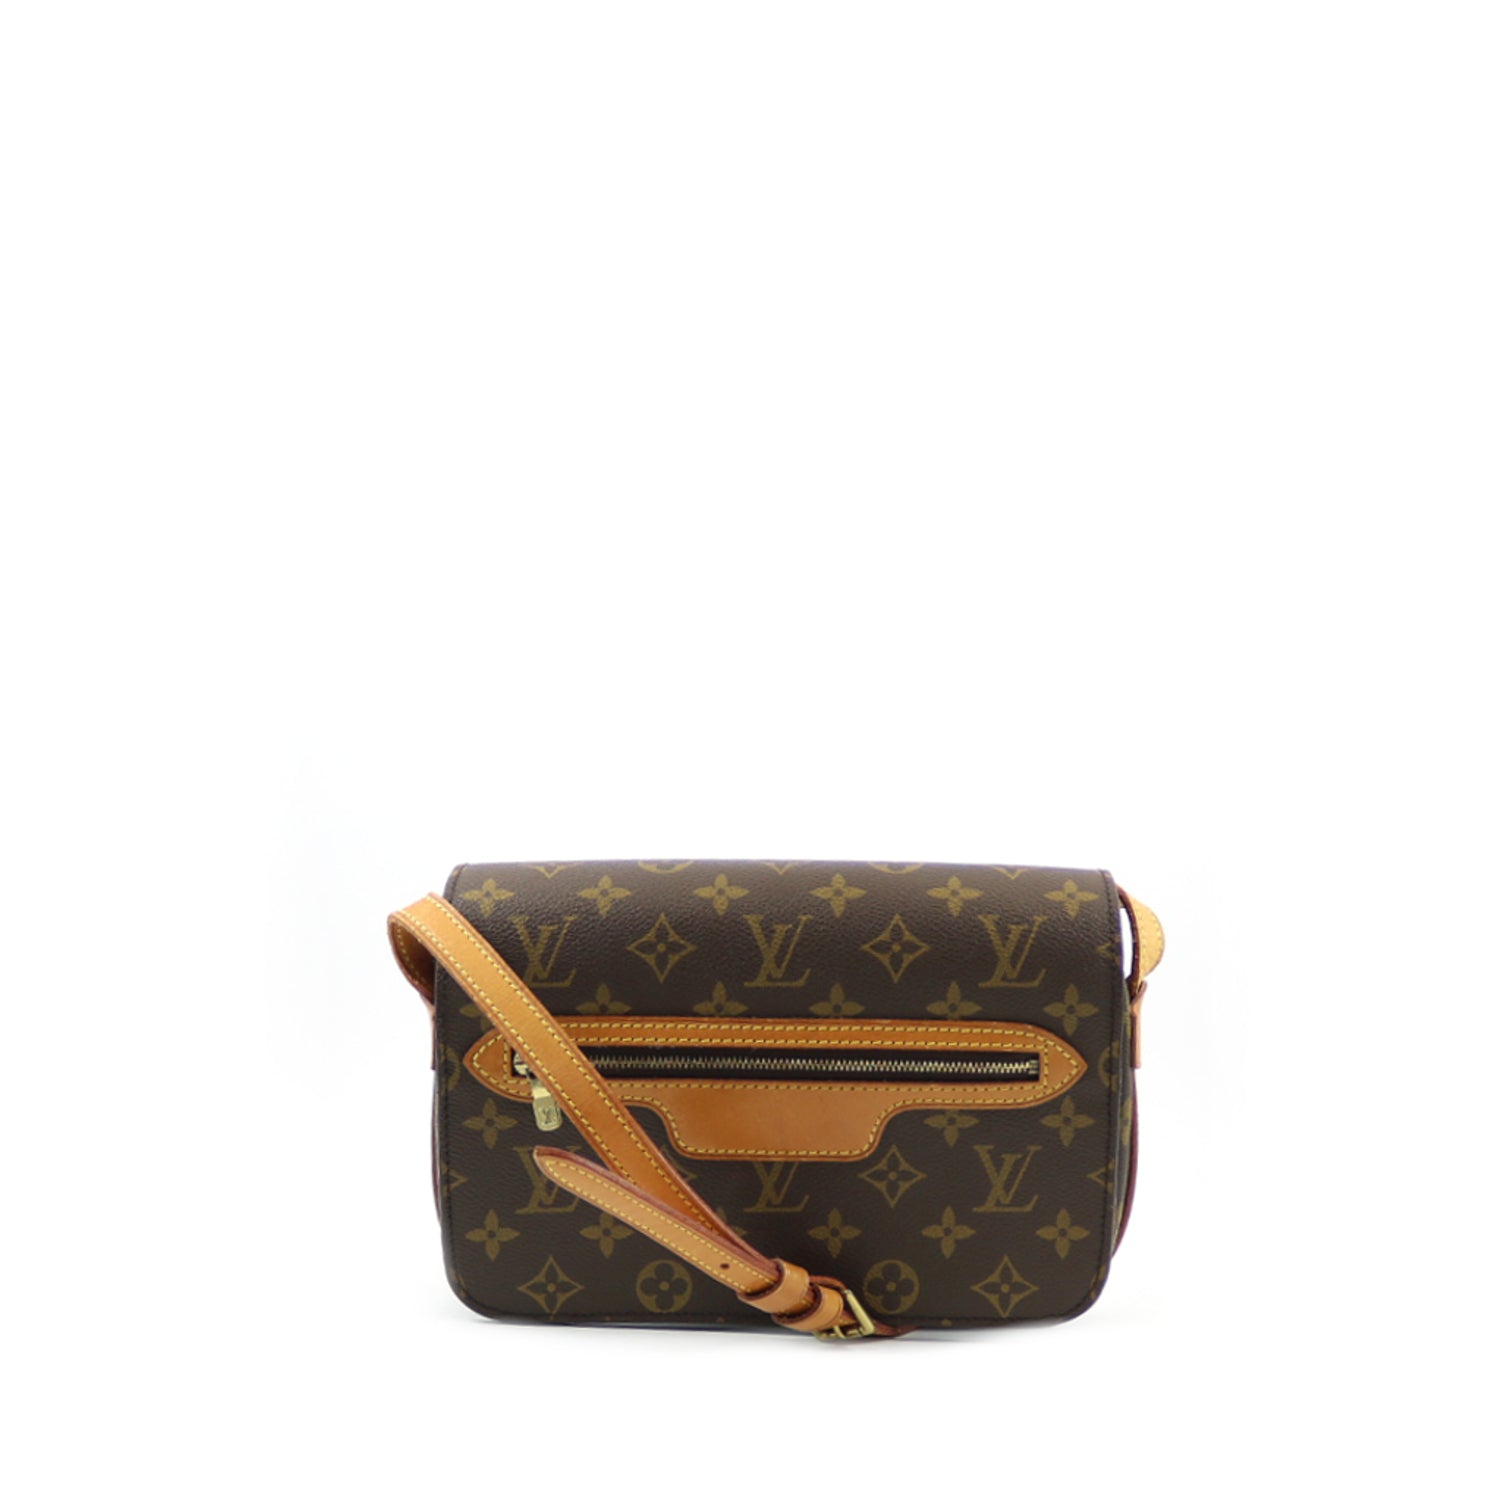 Authentic Louis Vuitton Saint Germain Crossbody Monogram Bag 